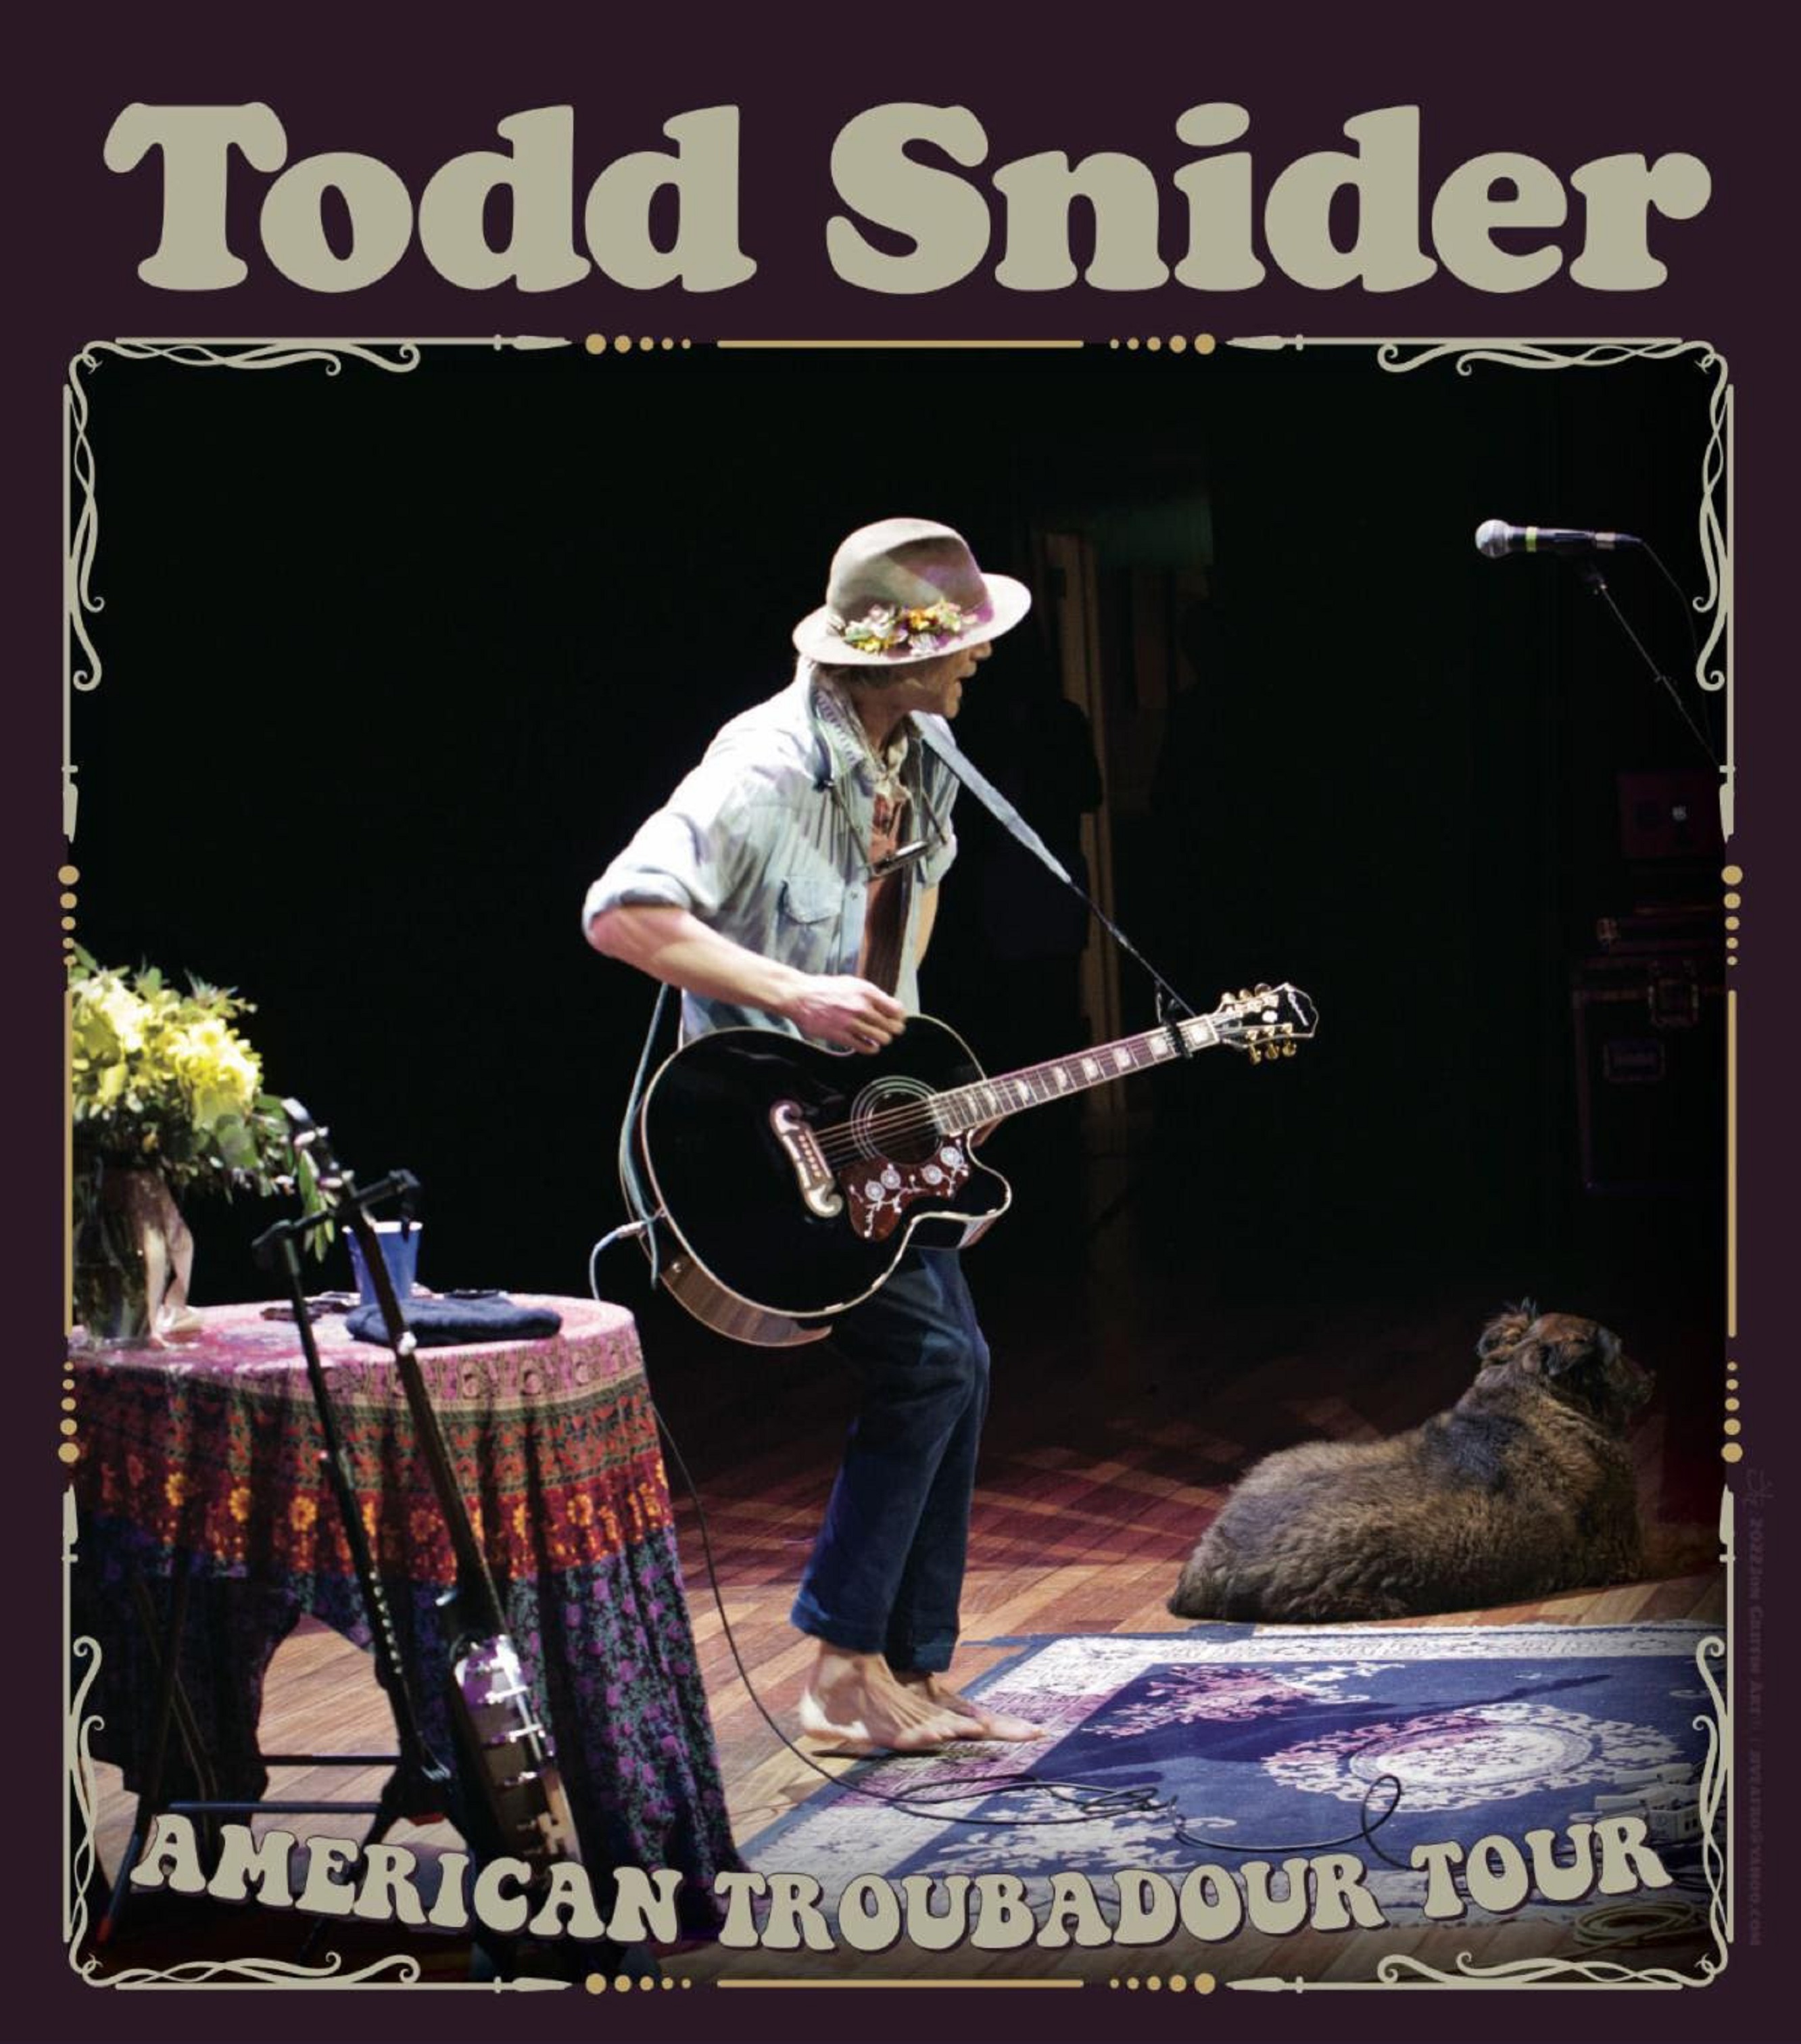 TODD SNIDER ANNOUNCES FALL 2022 "AMERICAN TROUBADOUR TOUR"